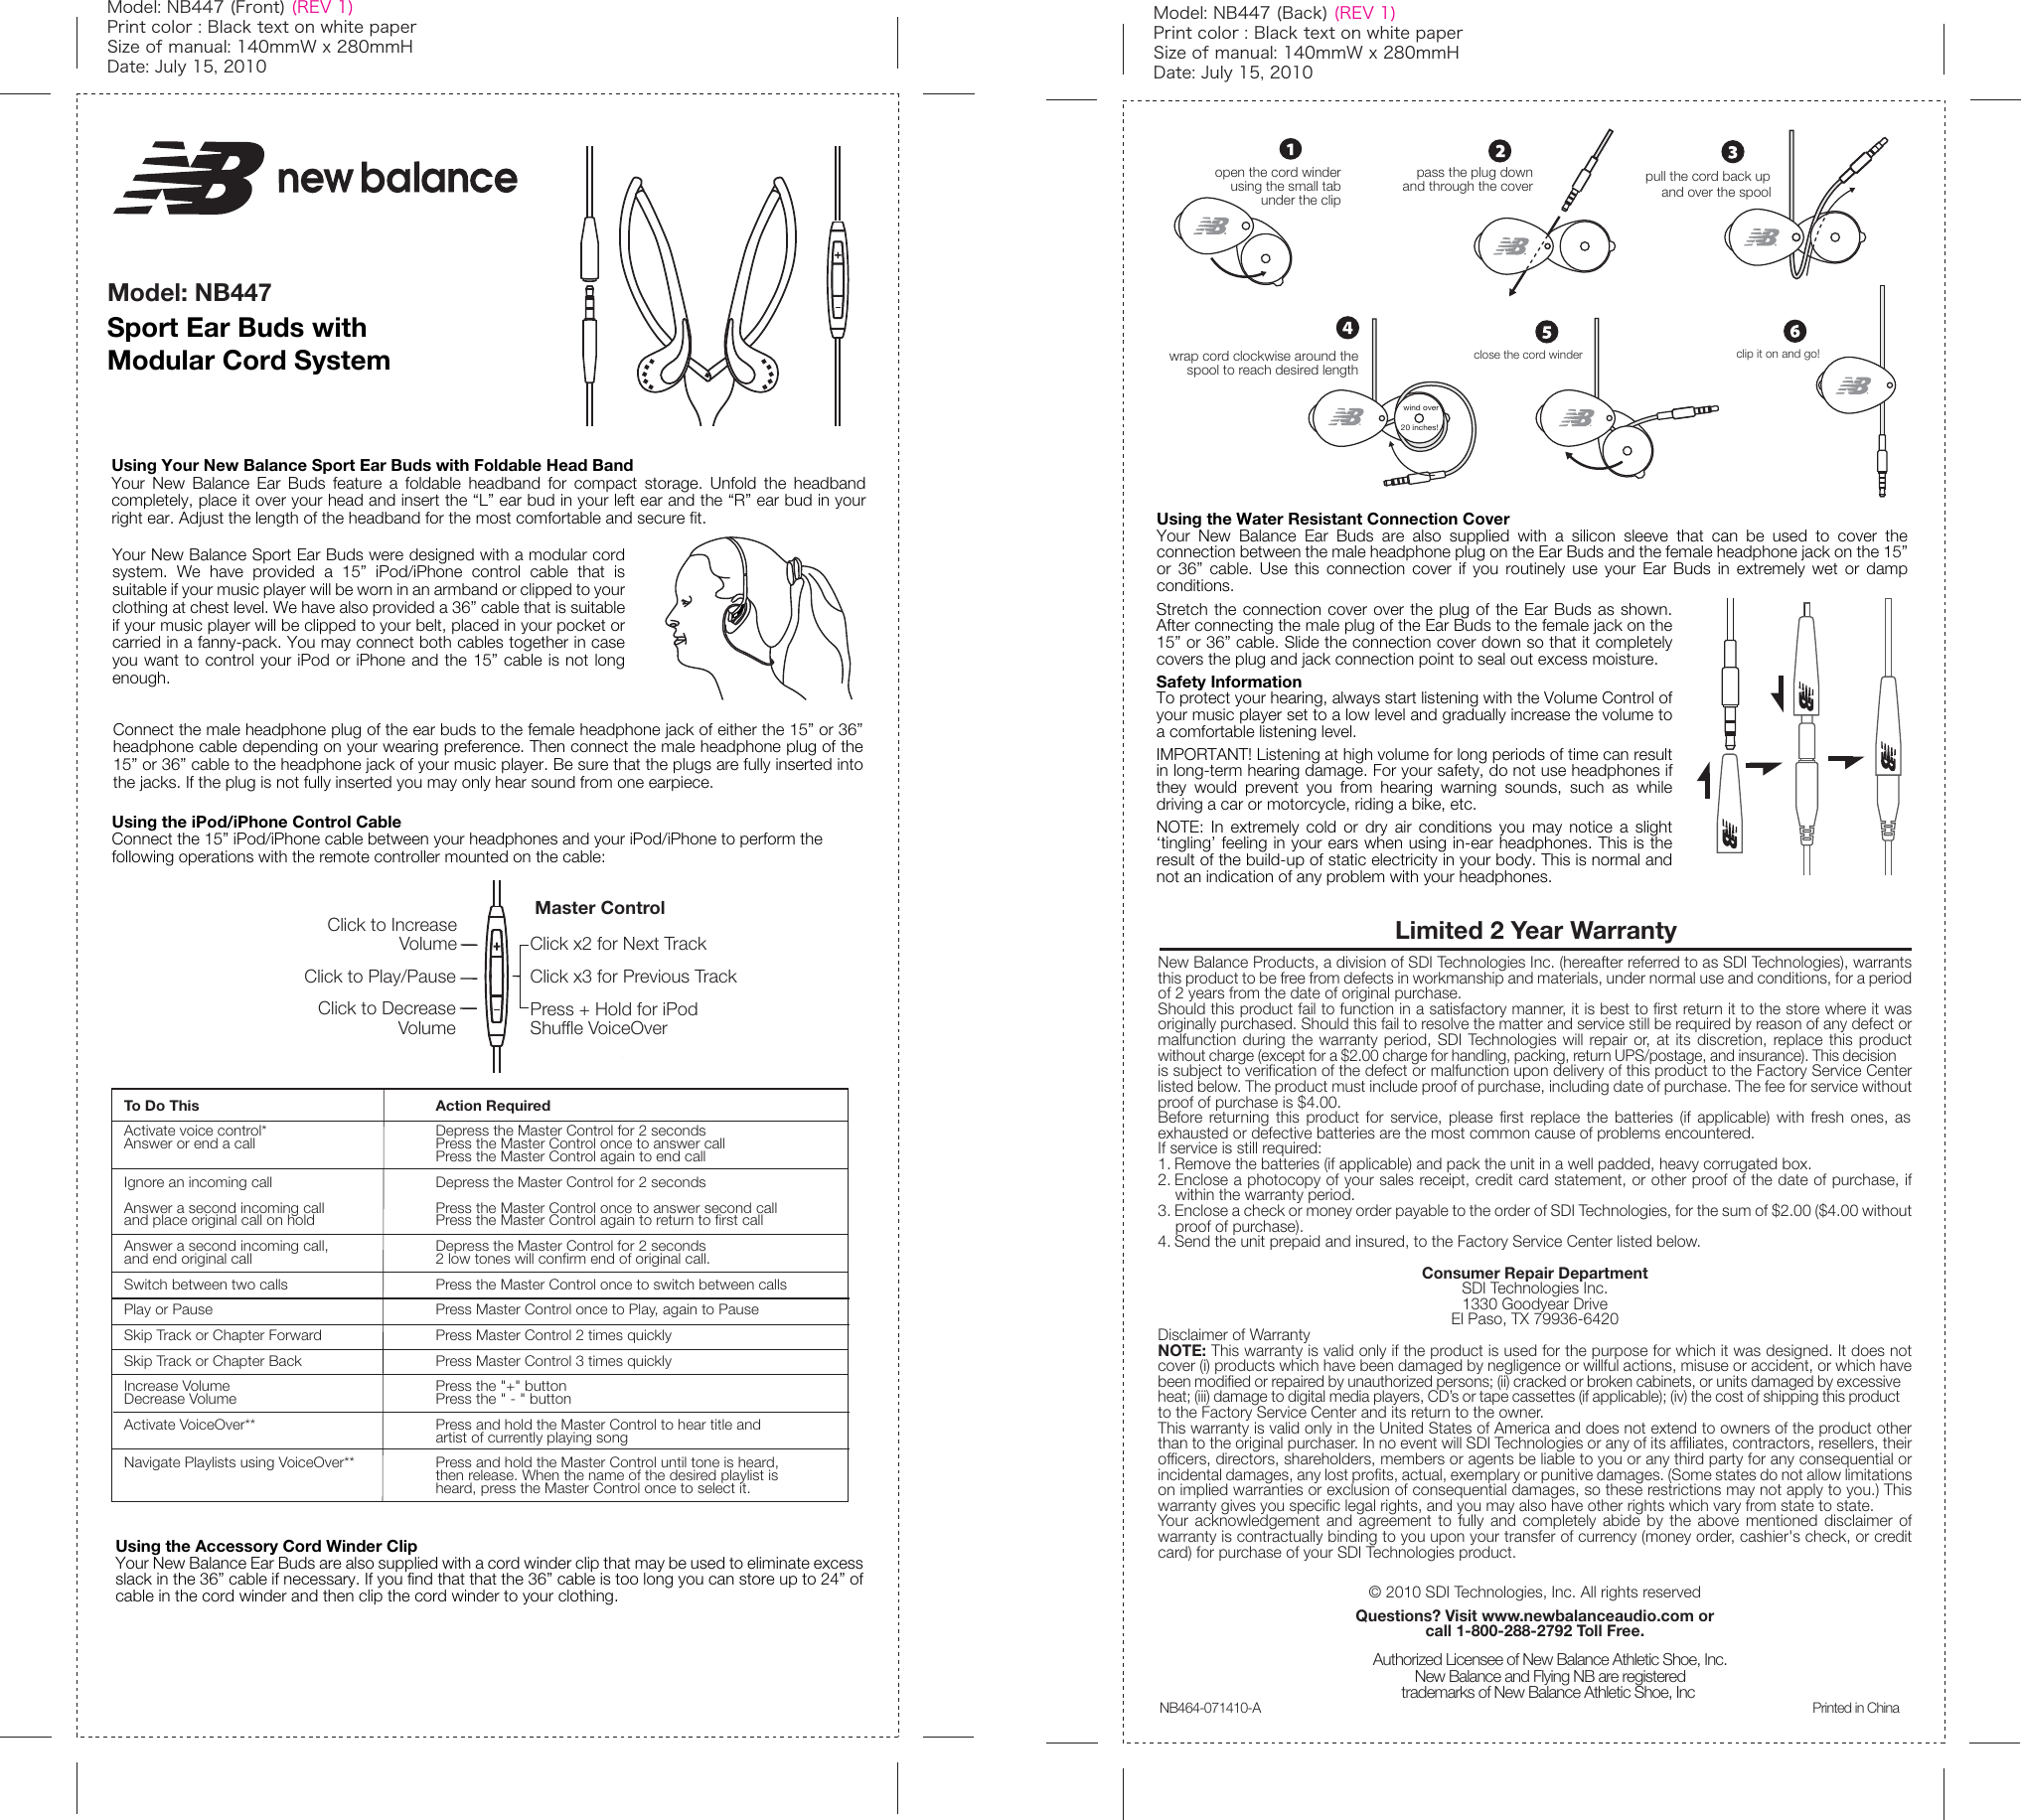 Page 1 of 2 - New-Balance New-Balance-Sport-Ear-Buds-Nb447-Users-Manual- NB447 IB (7-15-10)  New-balance-sport-ear-buds-nb447-users-manual